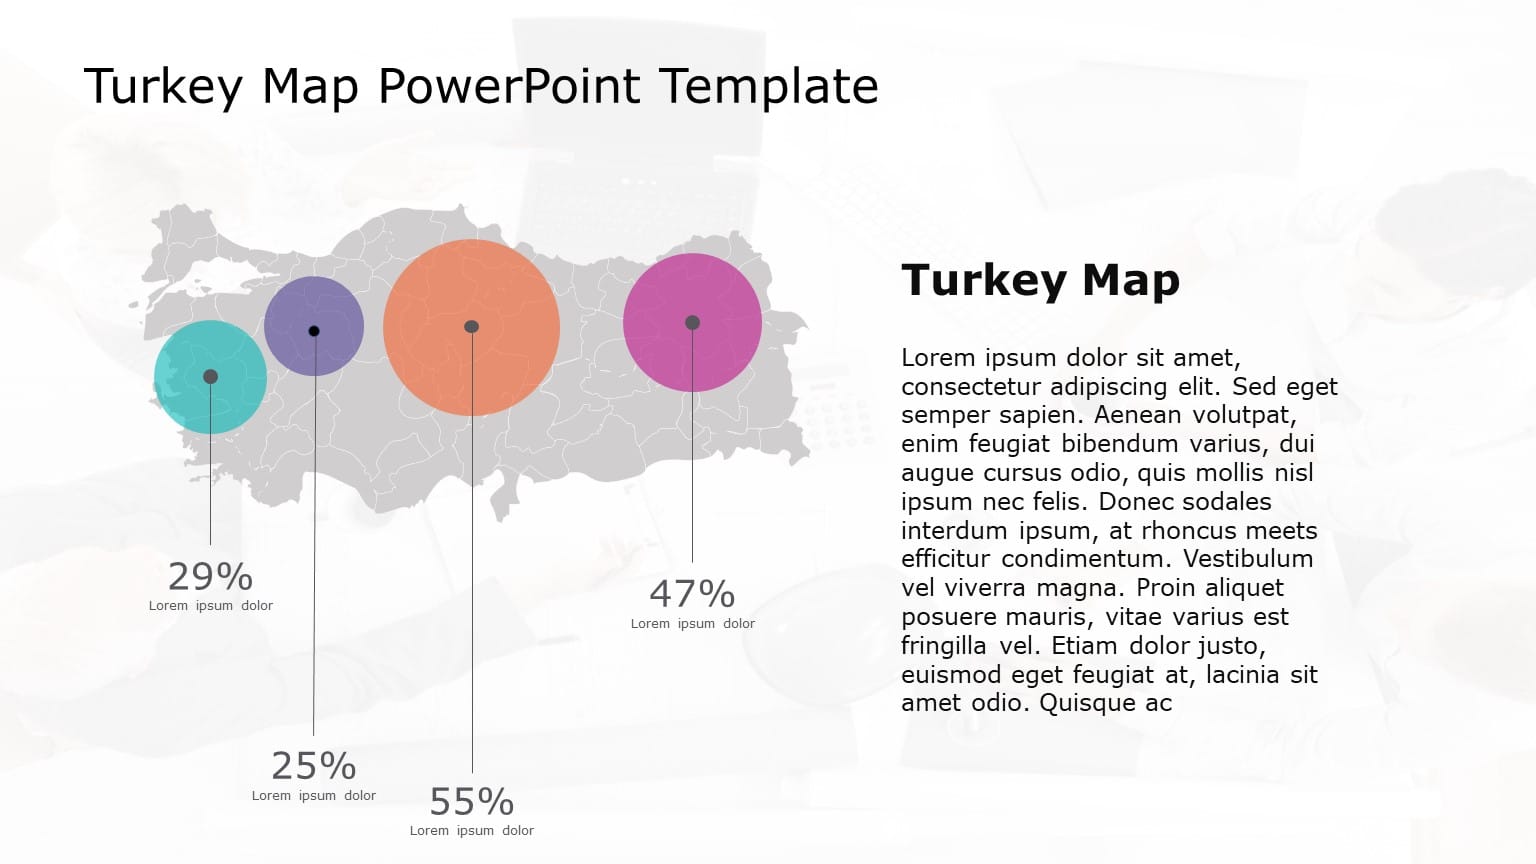 Turkey Map PowerPoint Template 08 & Google Slides Theme